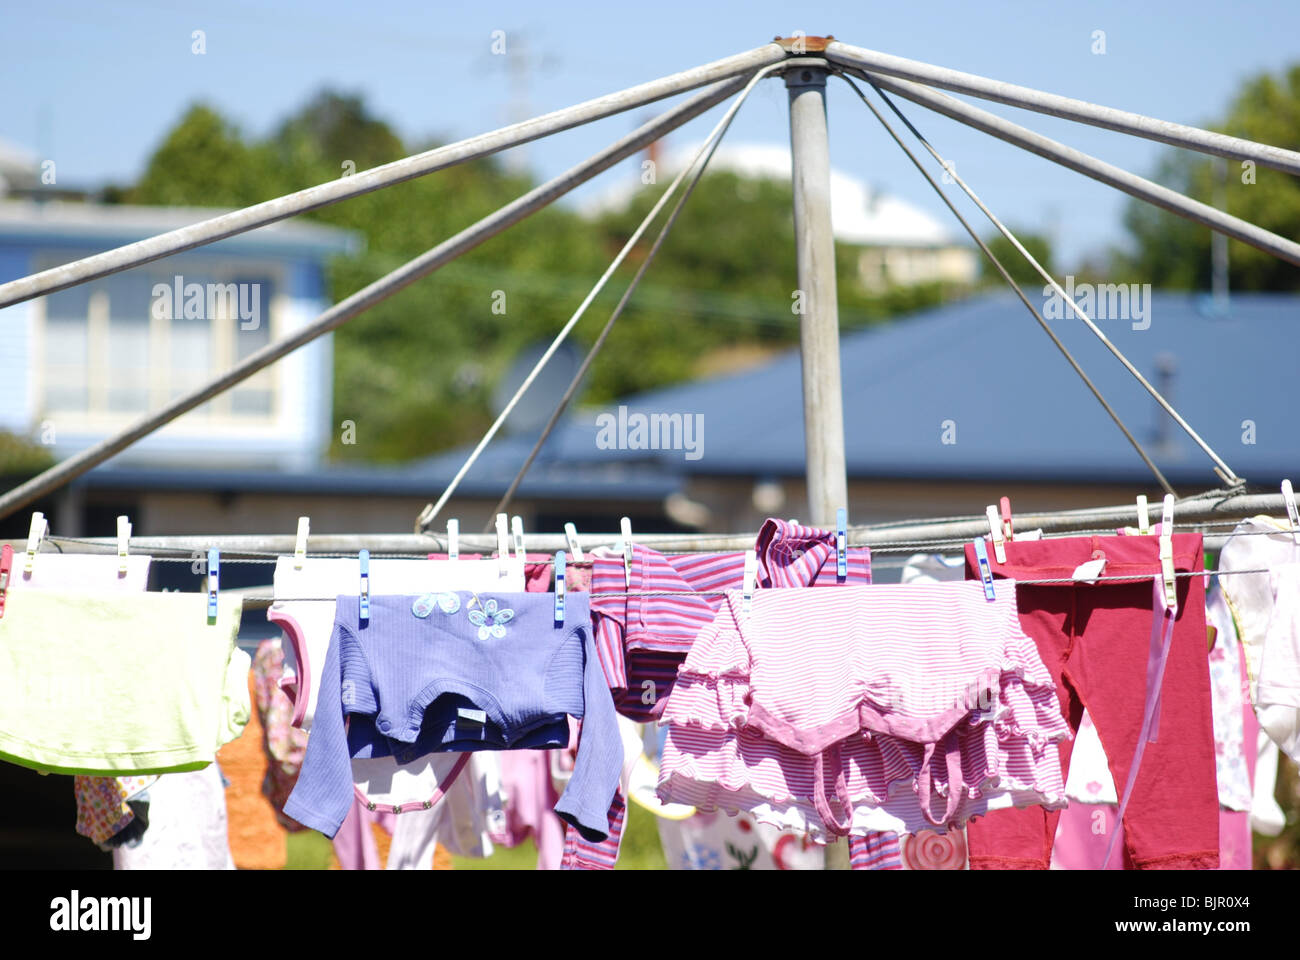 Hills hoist washing line with laundry drying in Australian backyard garden. Stock Photo